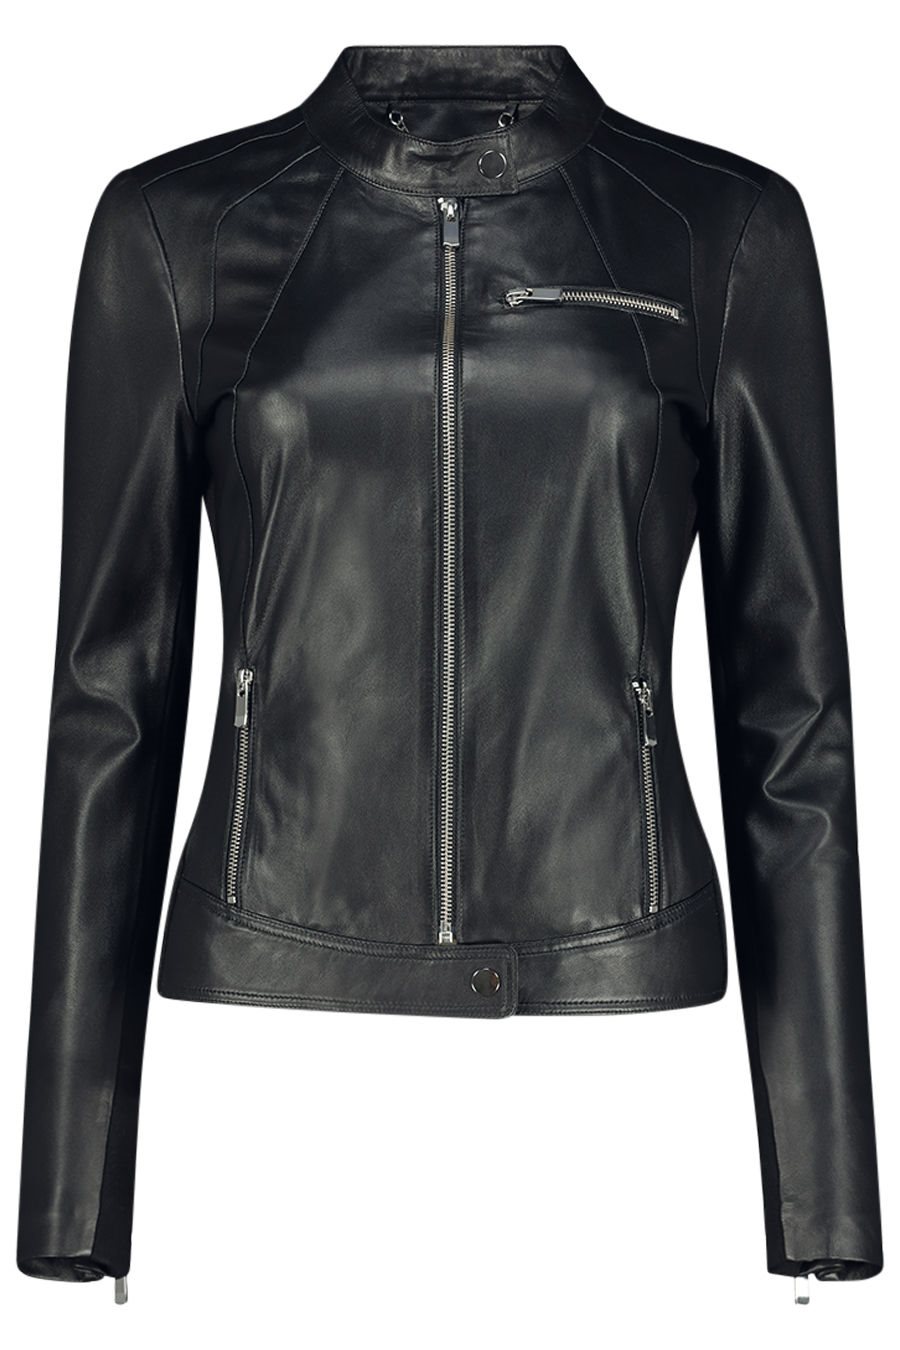 firusas.com_Arma_leather jacket_EUR 405